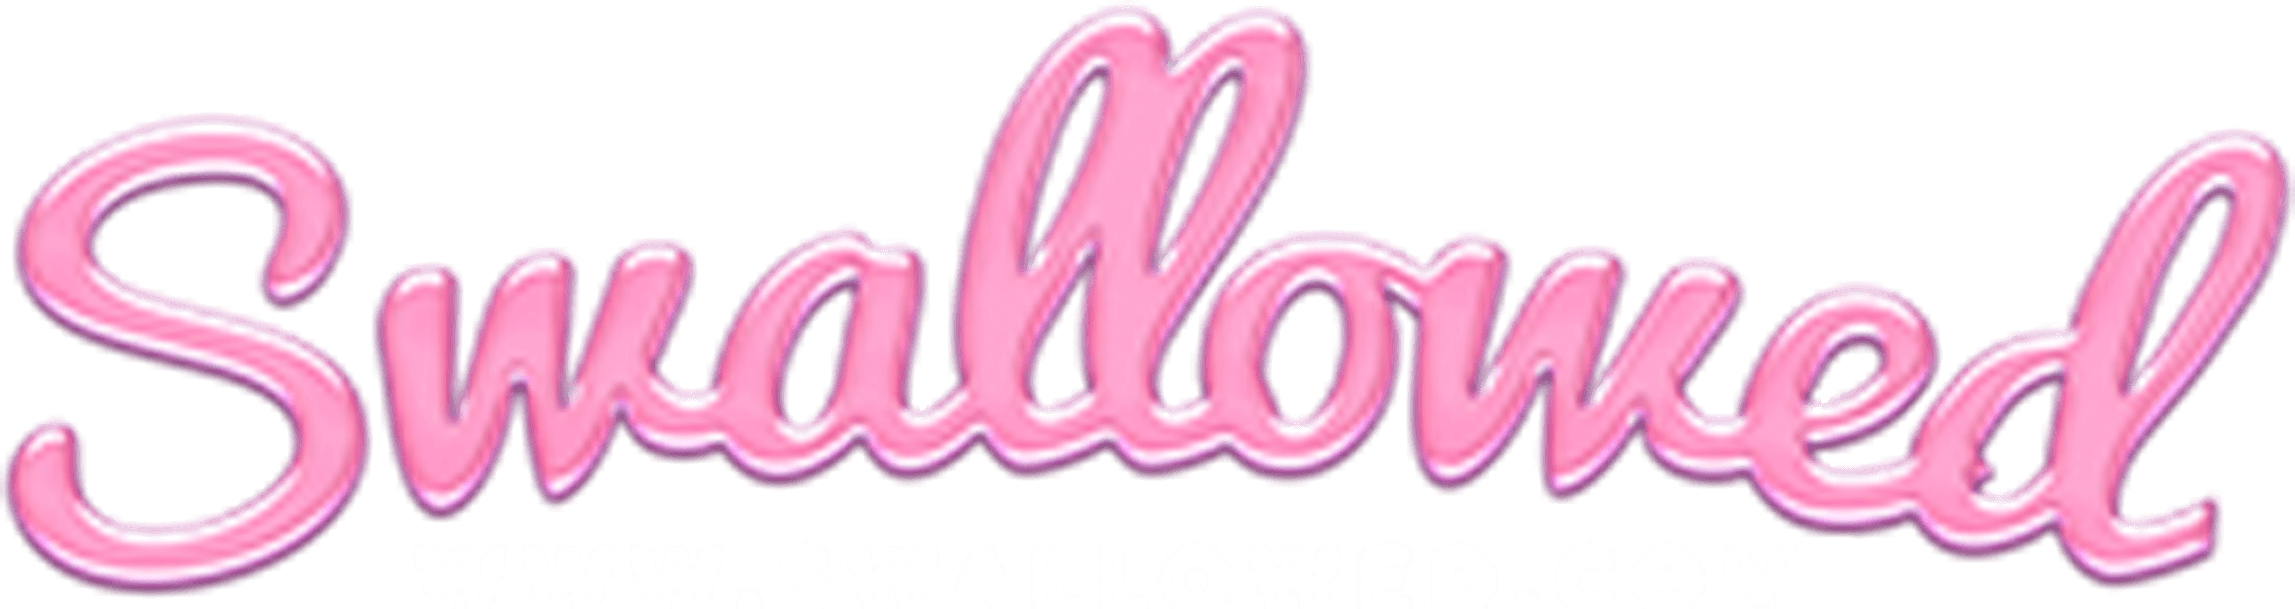 Swallowed logo